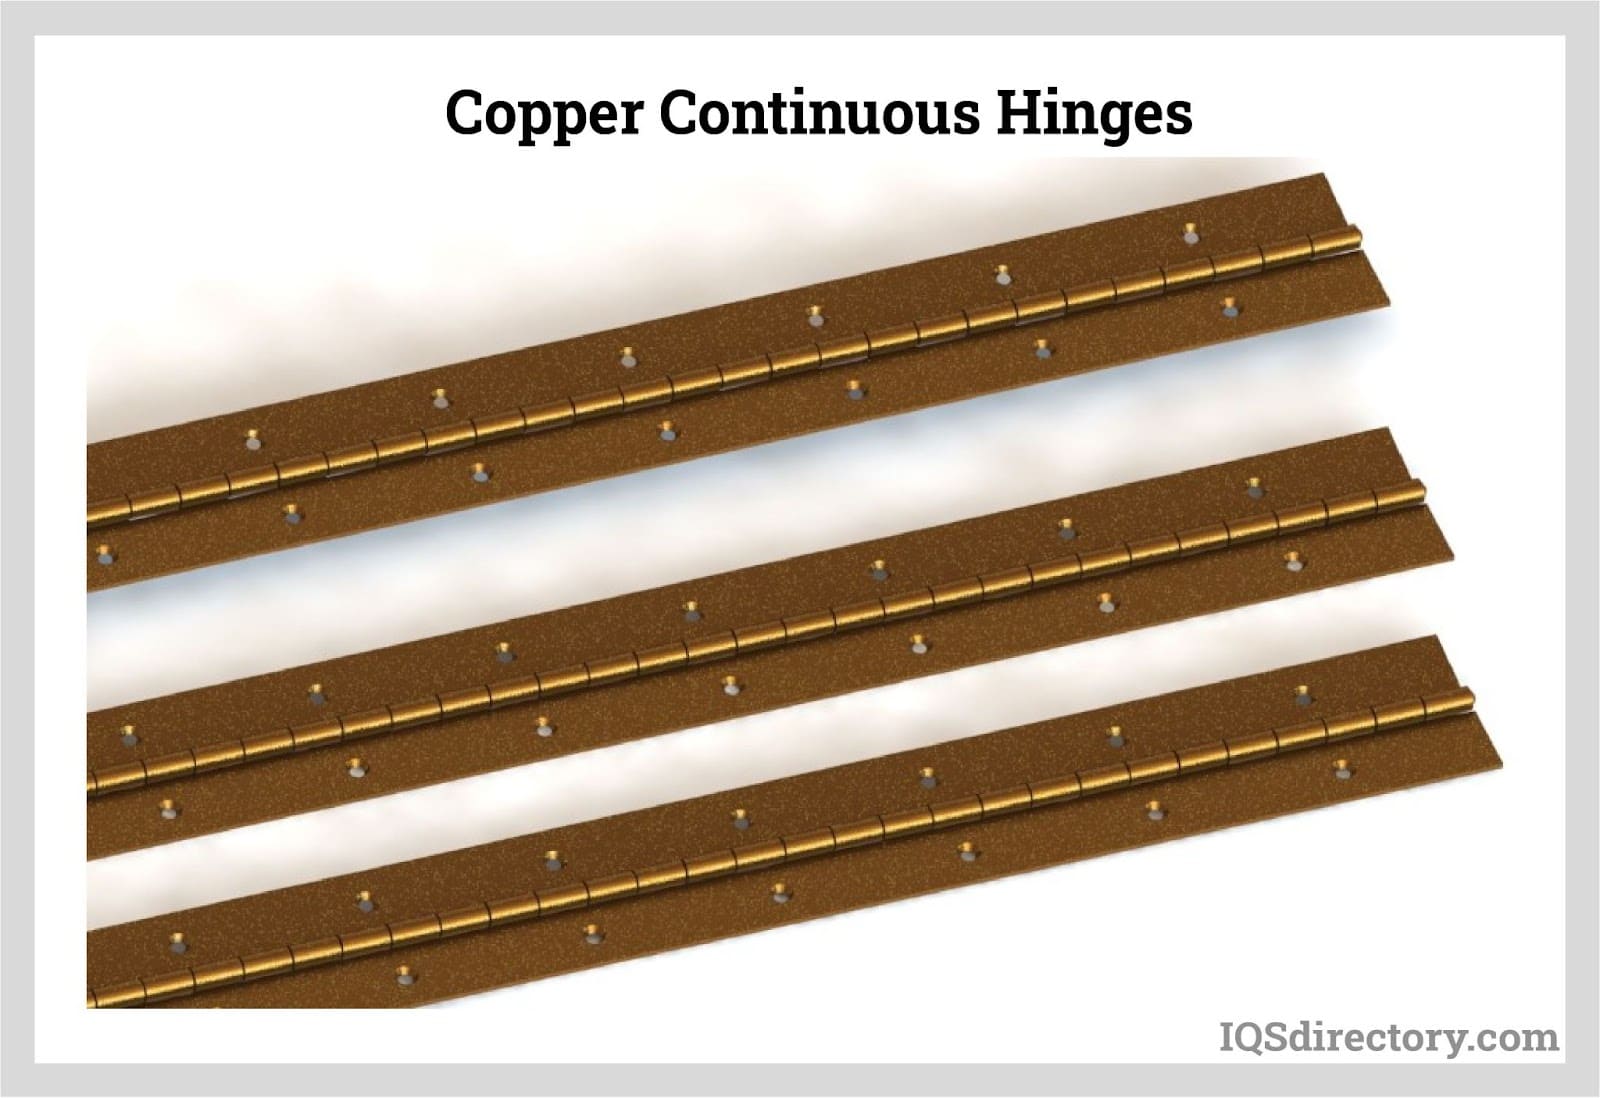 Copper Continuous Hinges